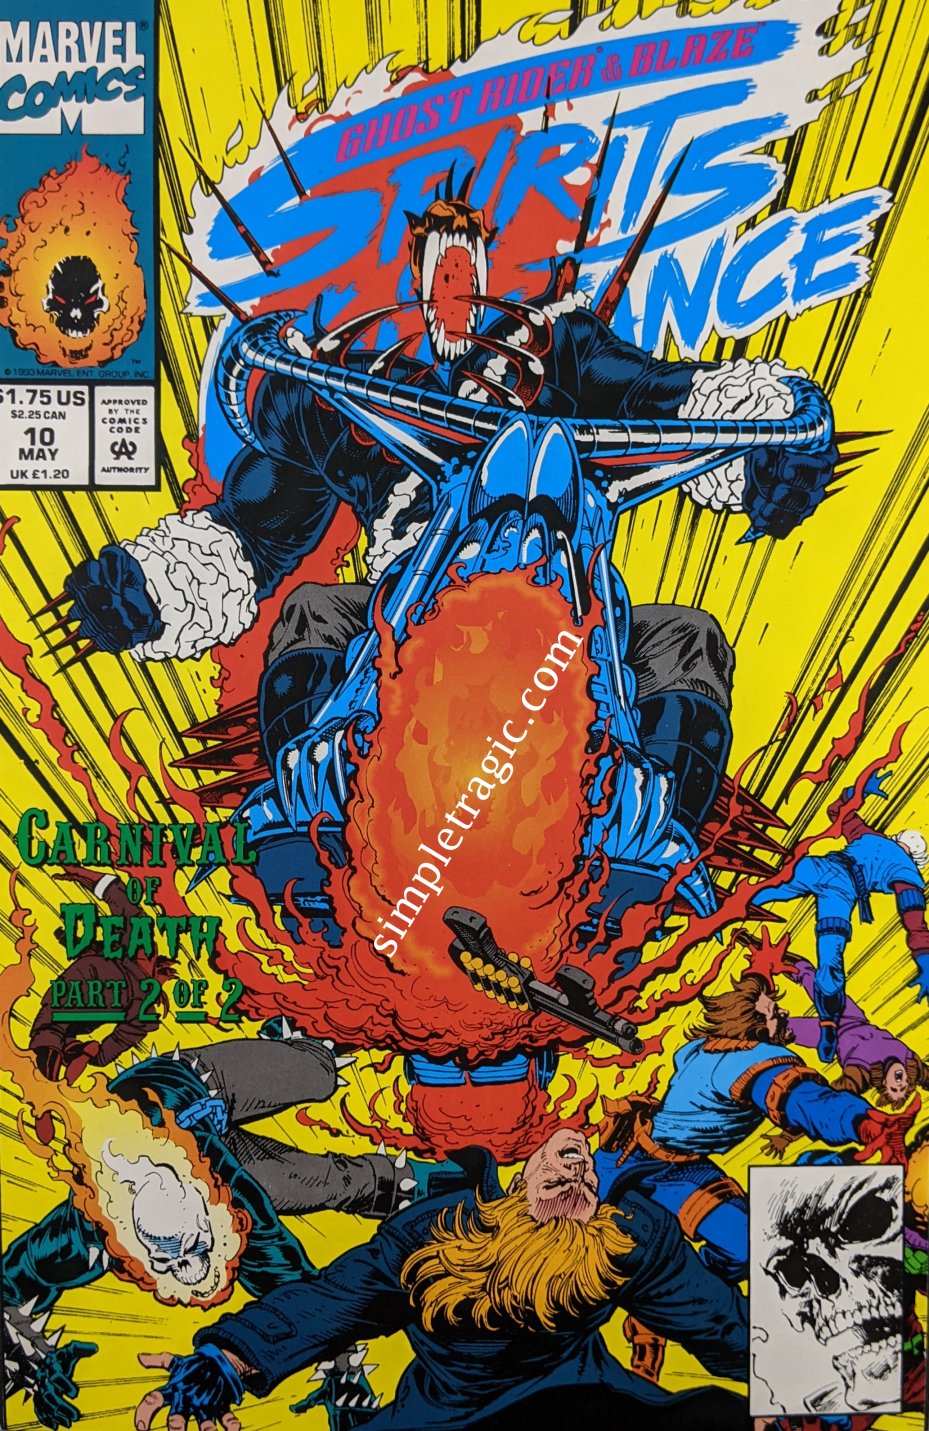 Ghost Rider/Blaze: Spirits of Vengeance (1992) #10